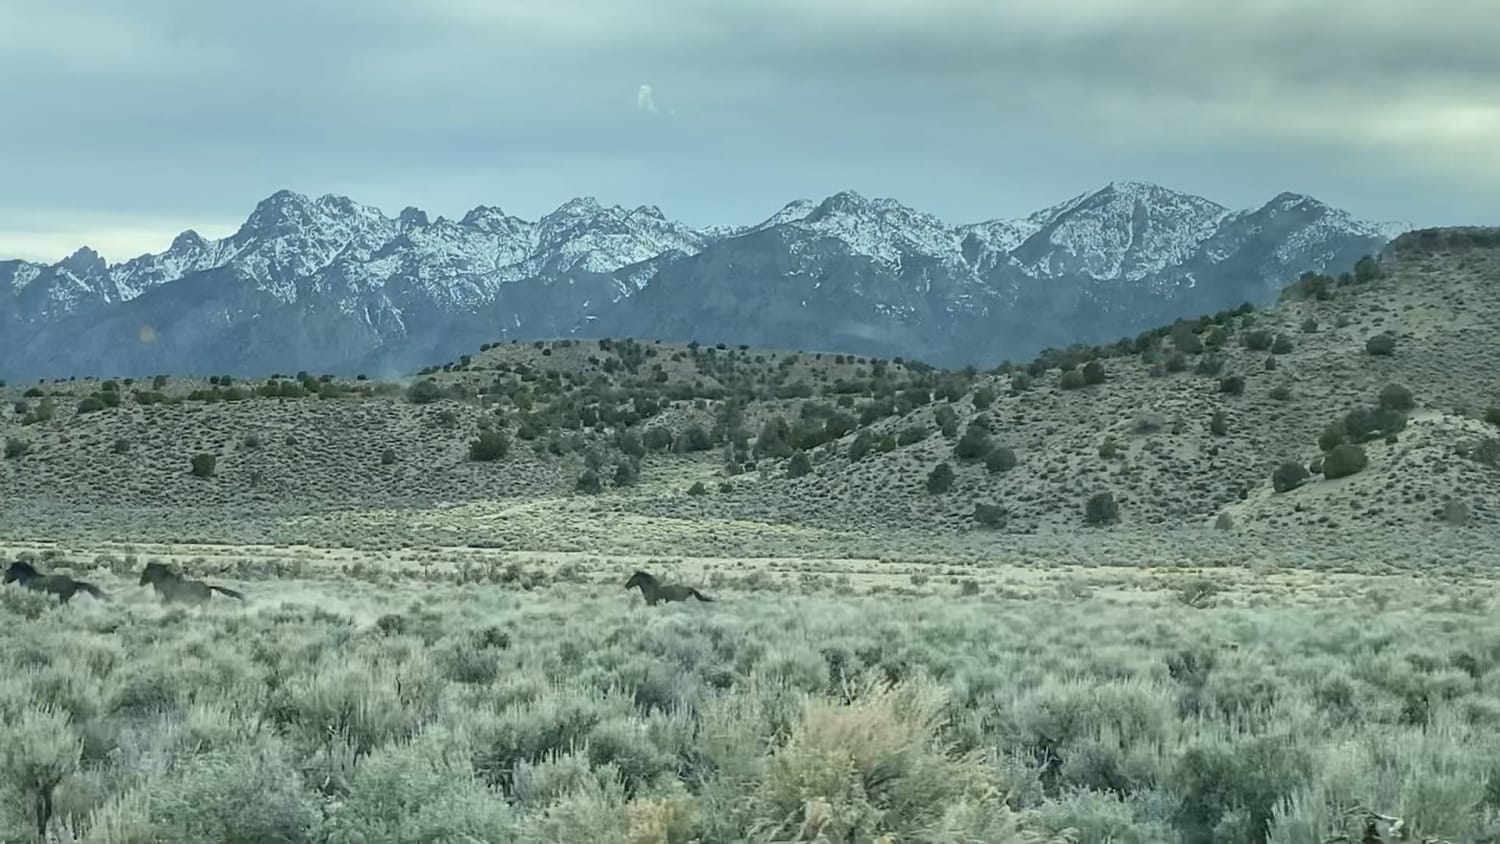 Mustangs galloping across the open range in Nevada